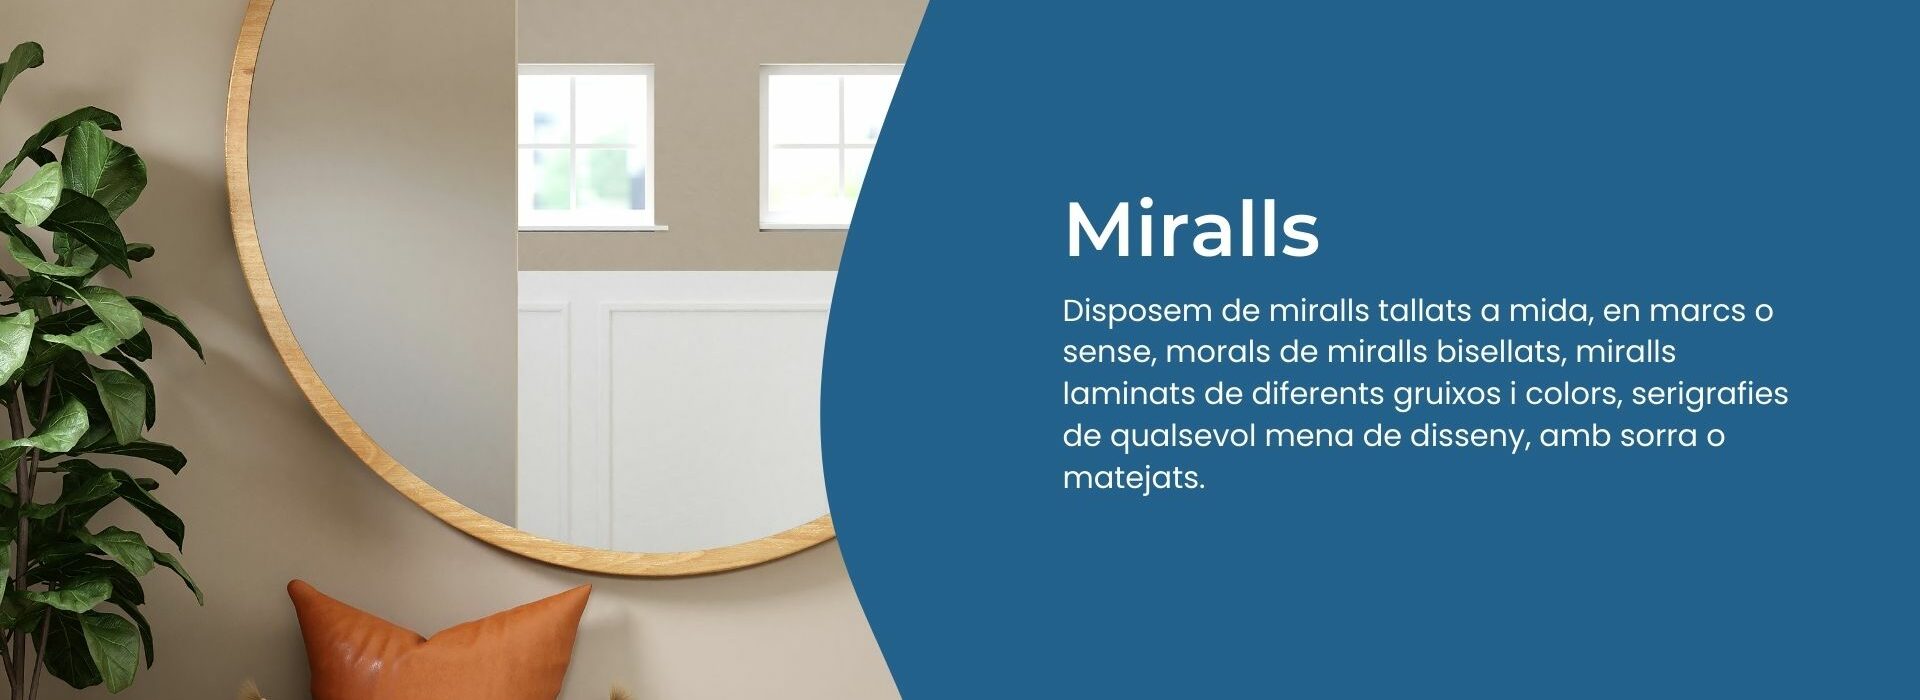 miralls1